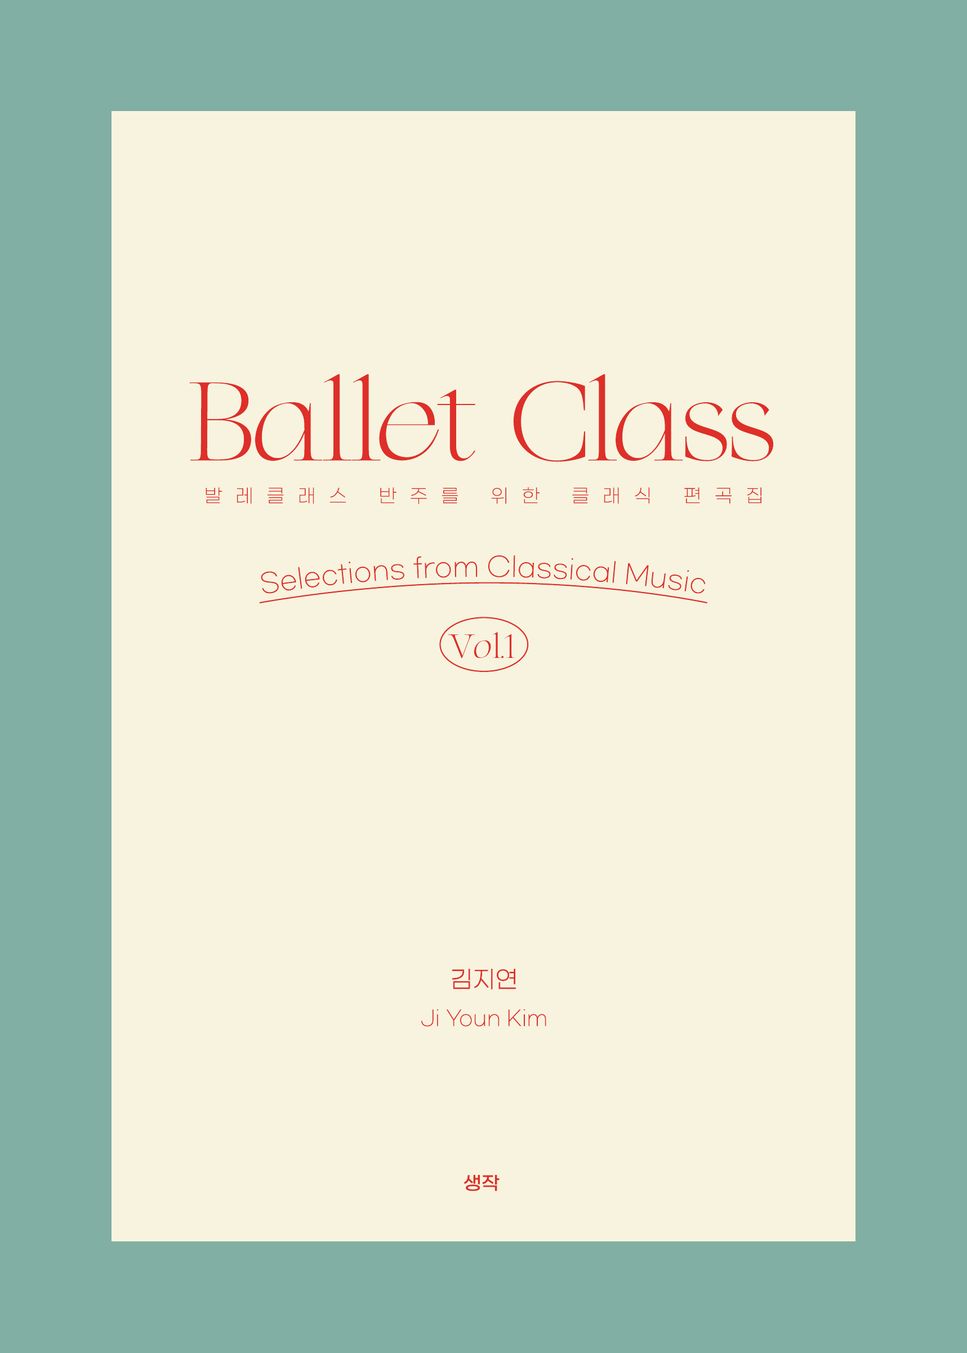 Ji Youn Kim - Ballet Class vol. 1 - 26. Medium allegro 2